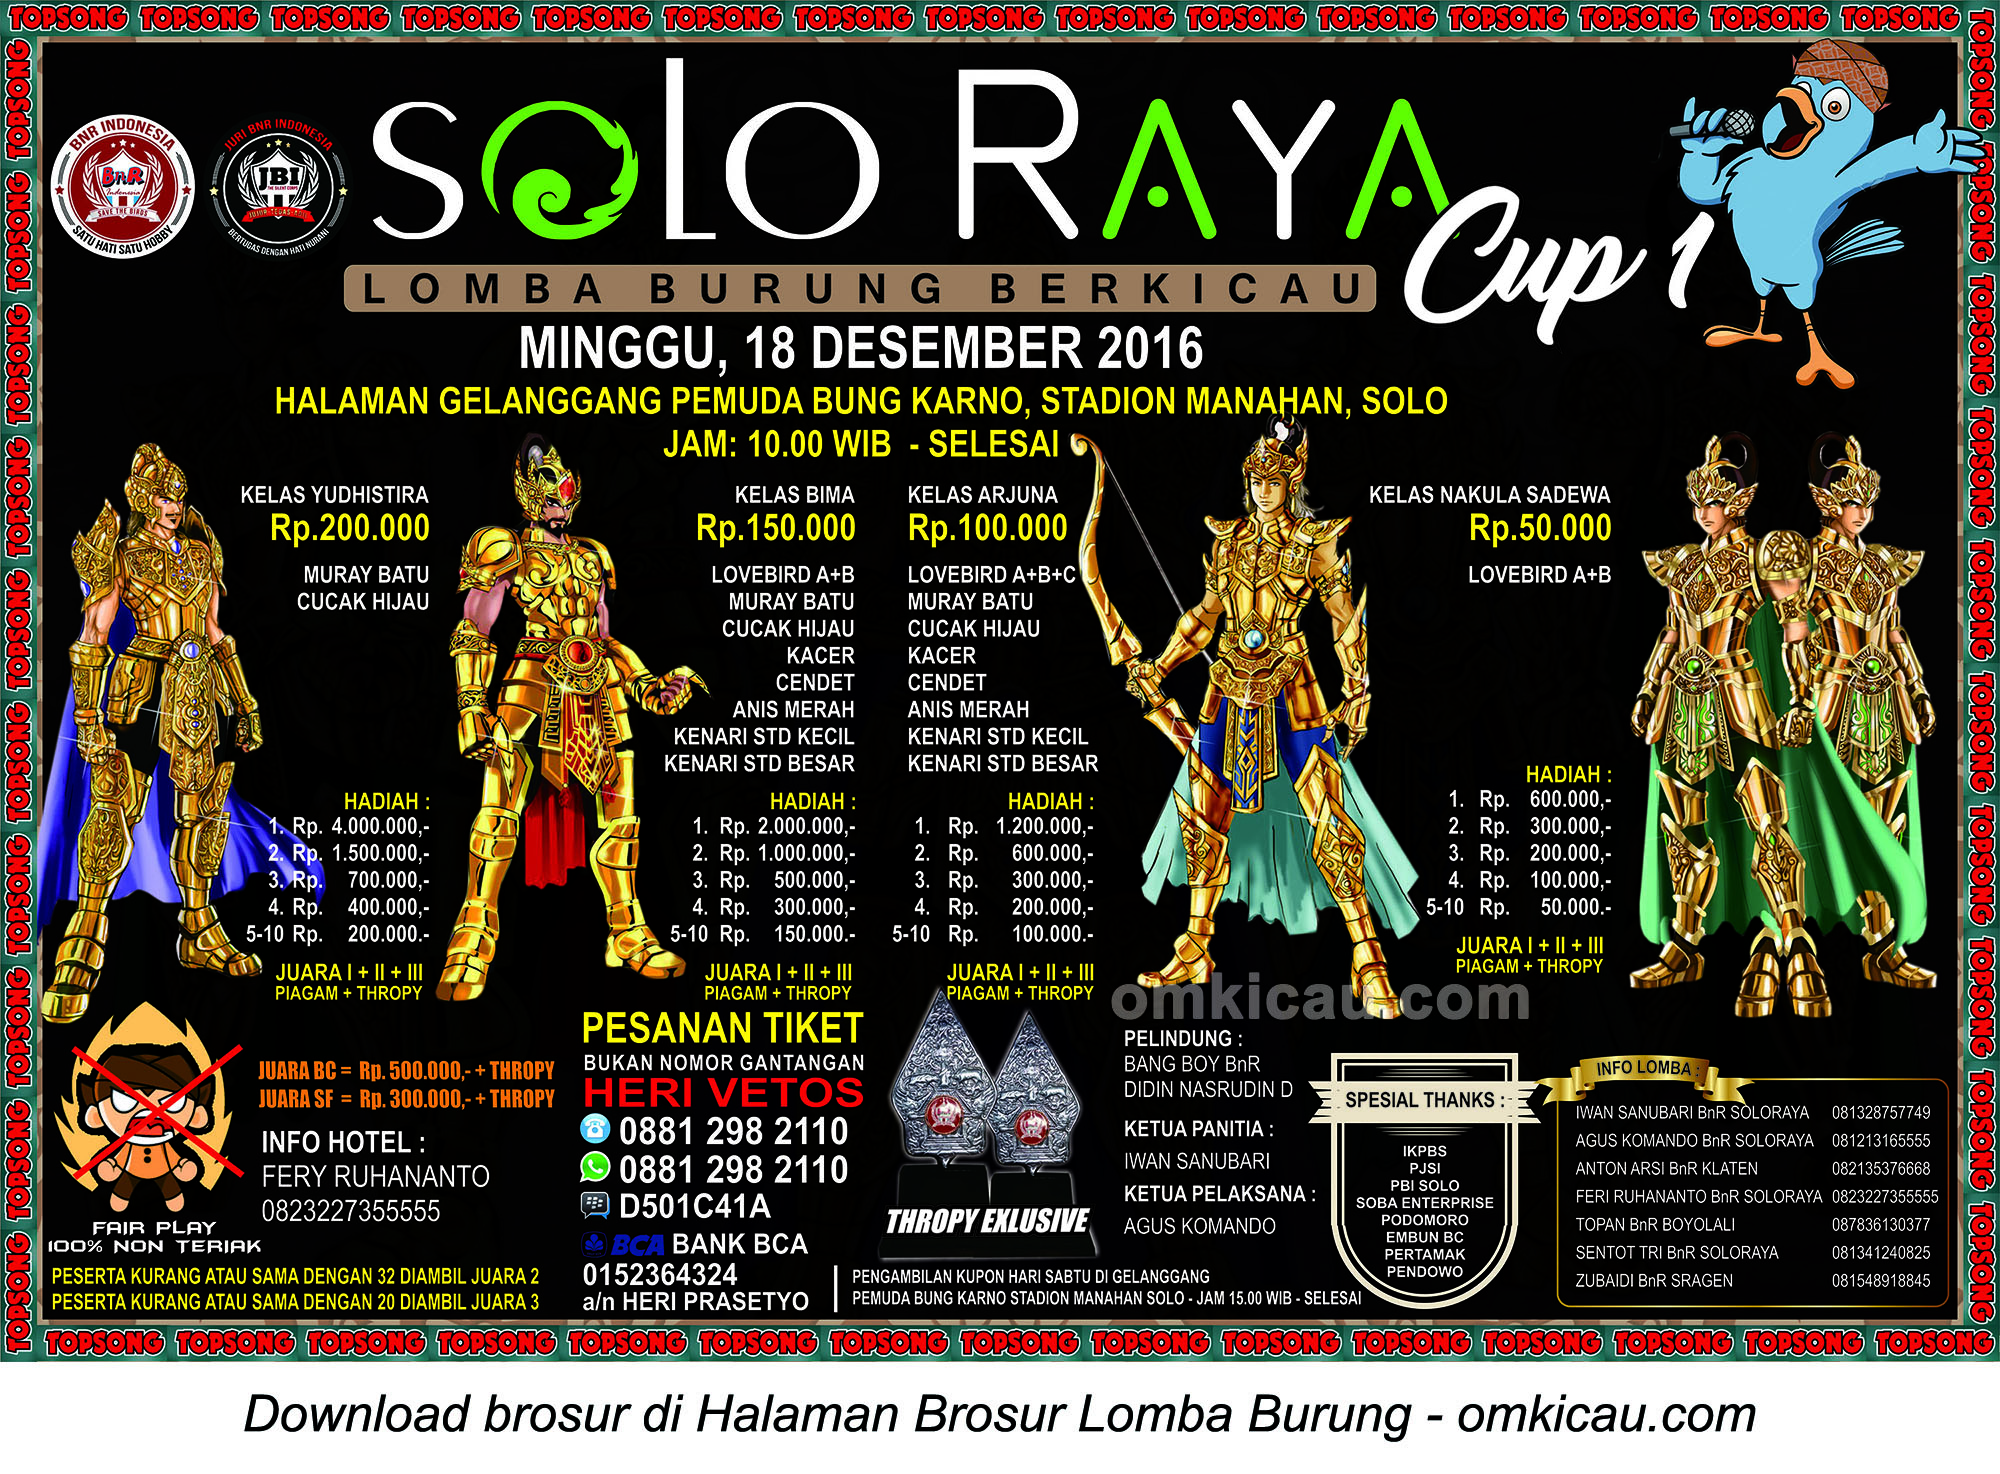 Brosur Revisi Lomba Burung Berkicau Solo Raya Cup 1, Solo, 18 Desember 2016